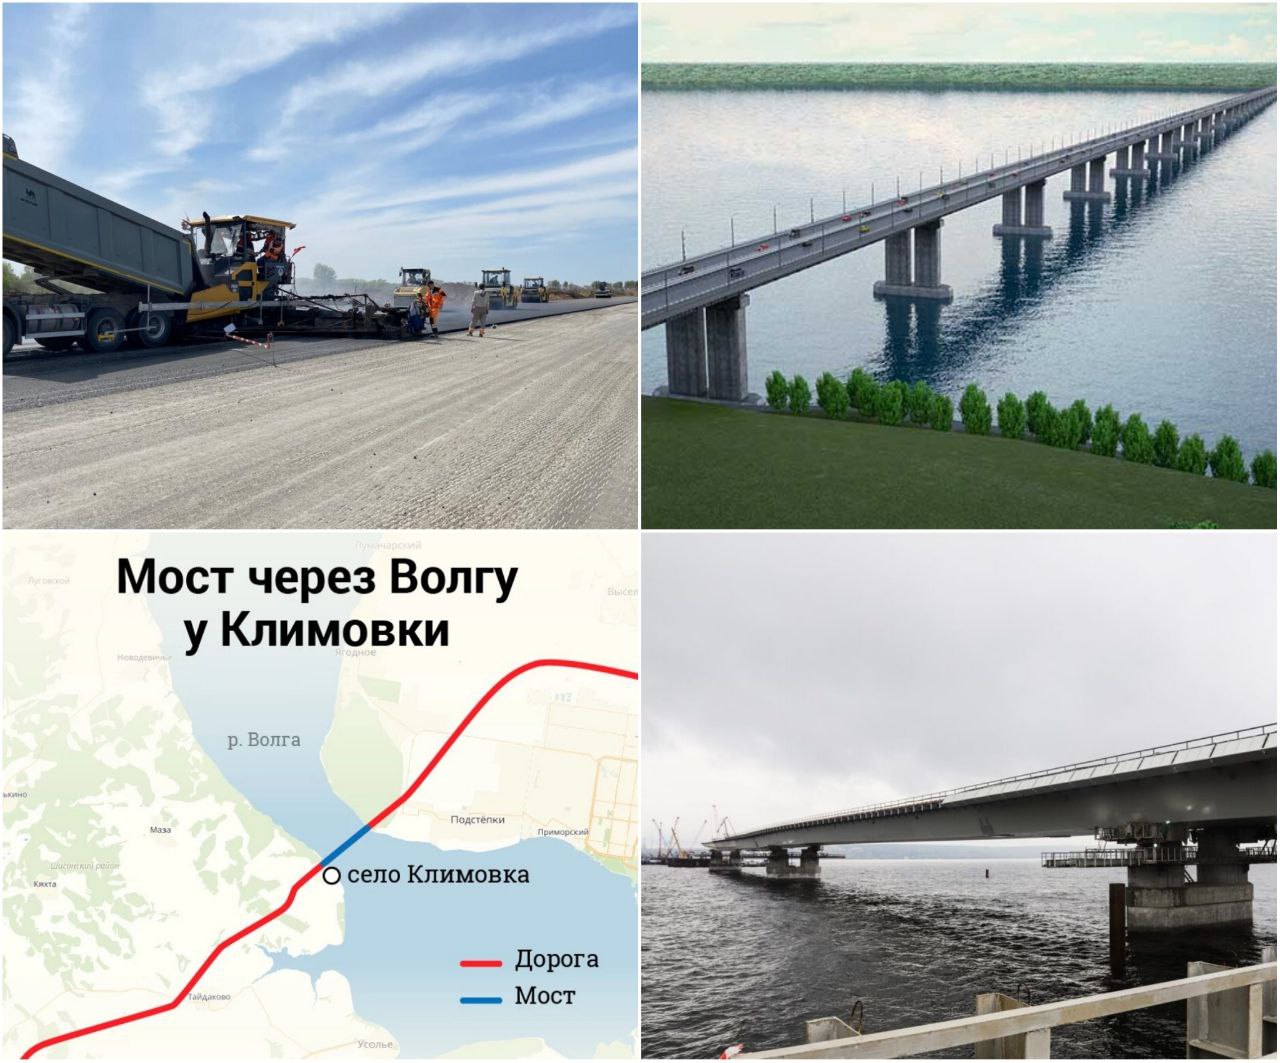 Мост на климовку тольятти